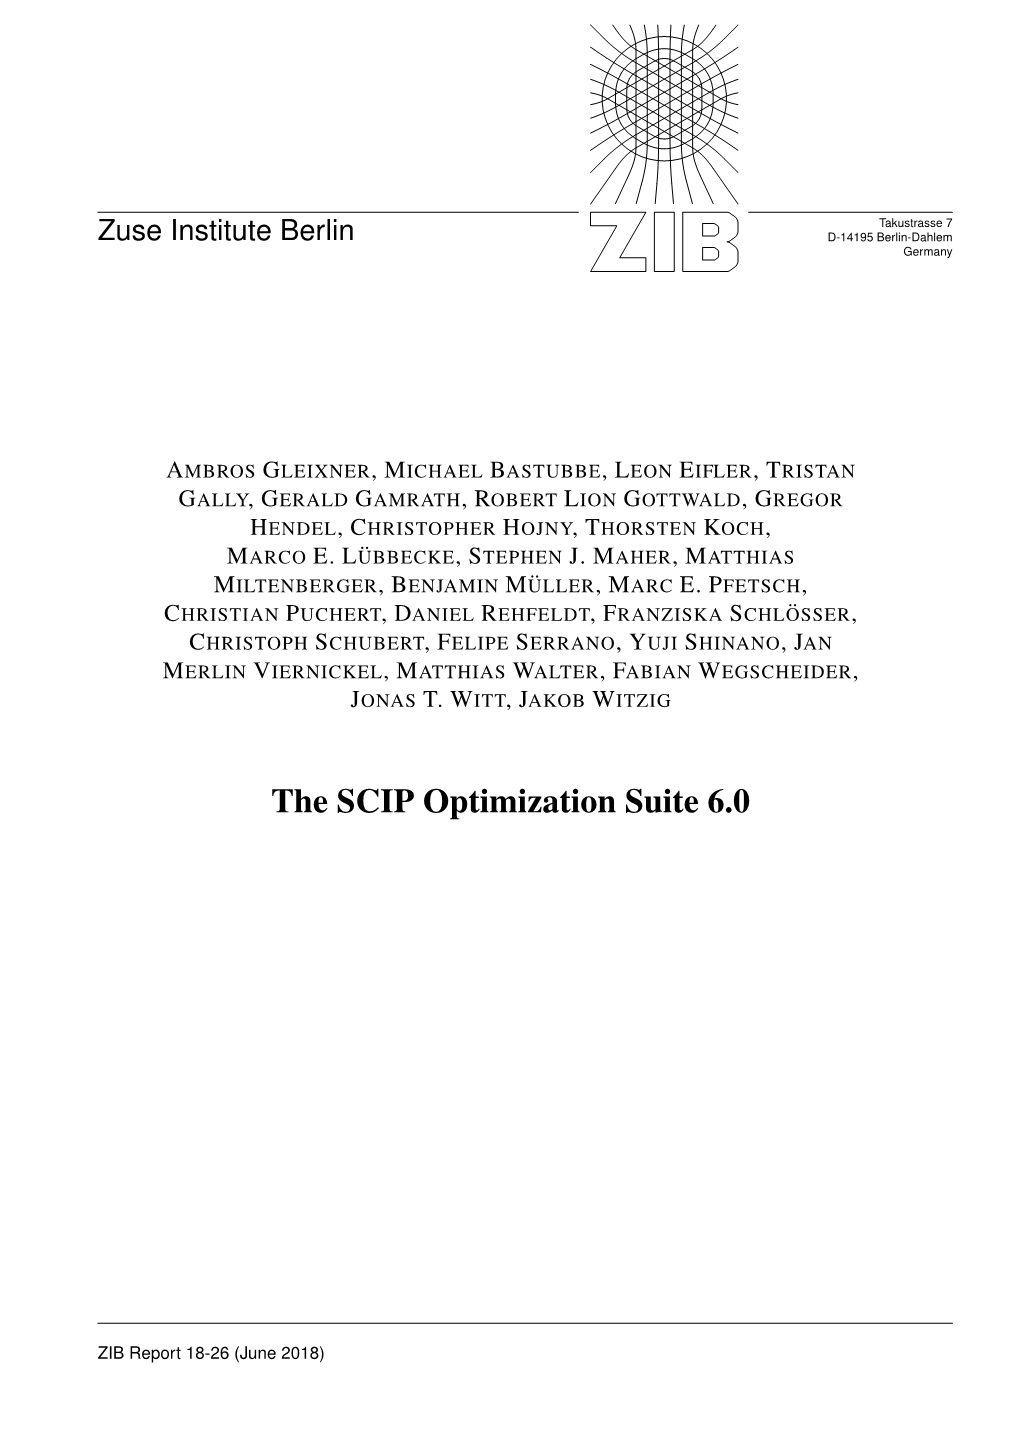 The SCIP Optimization Suite 6.0